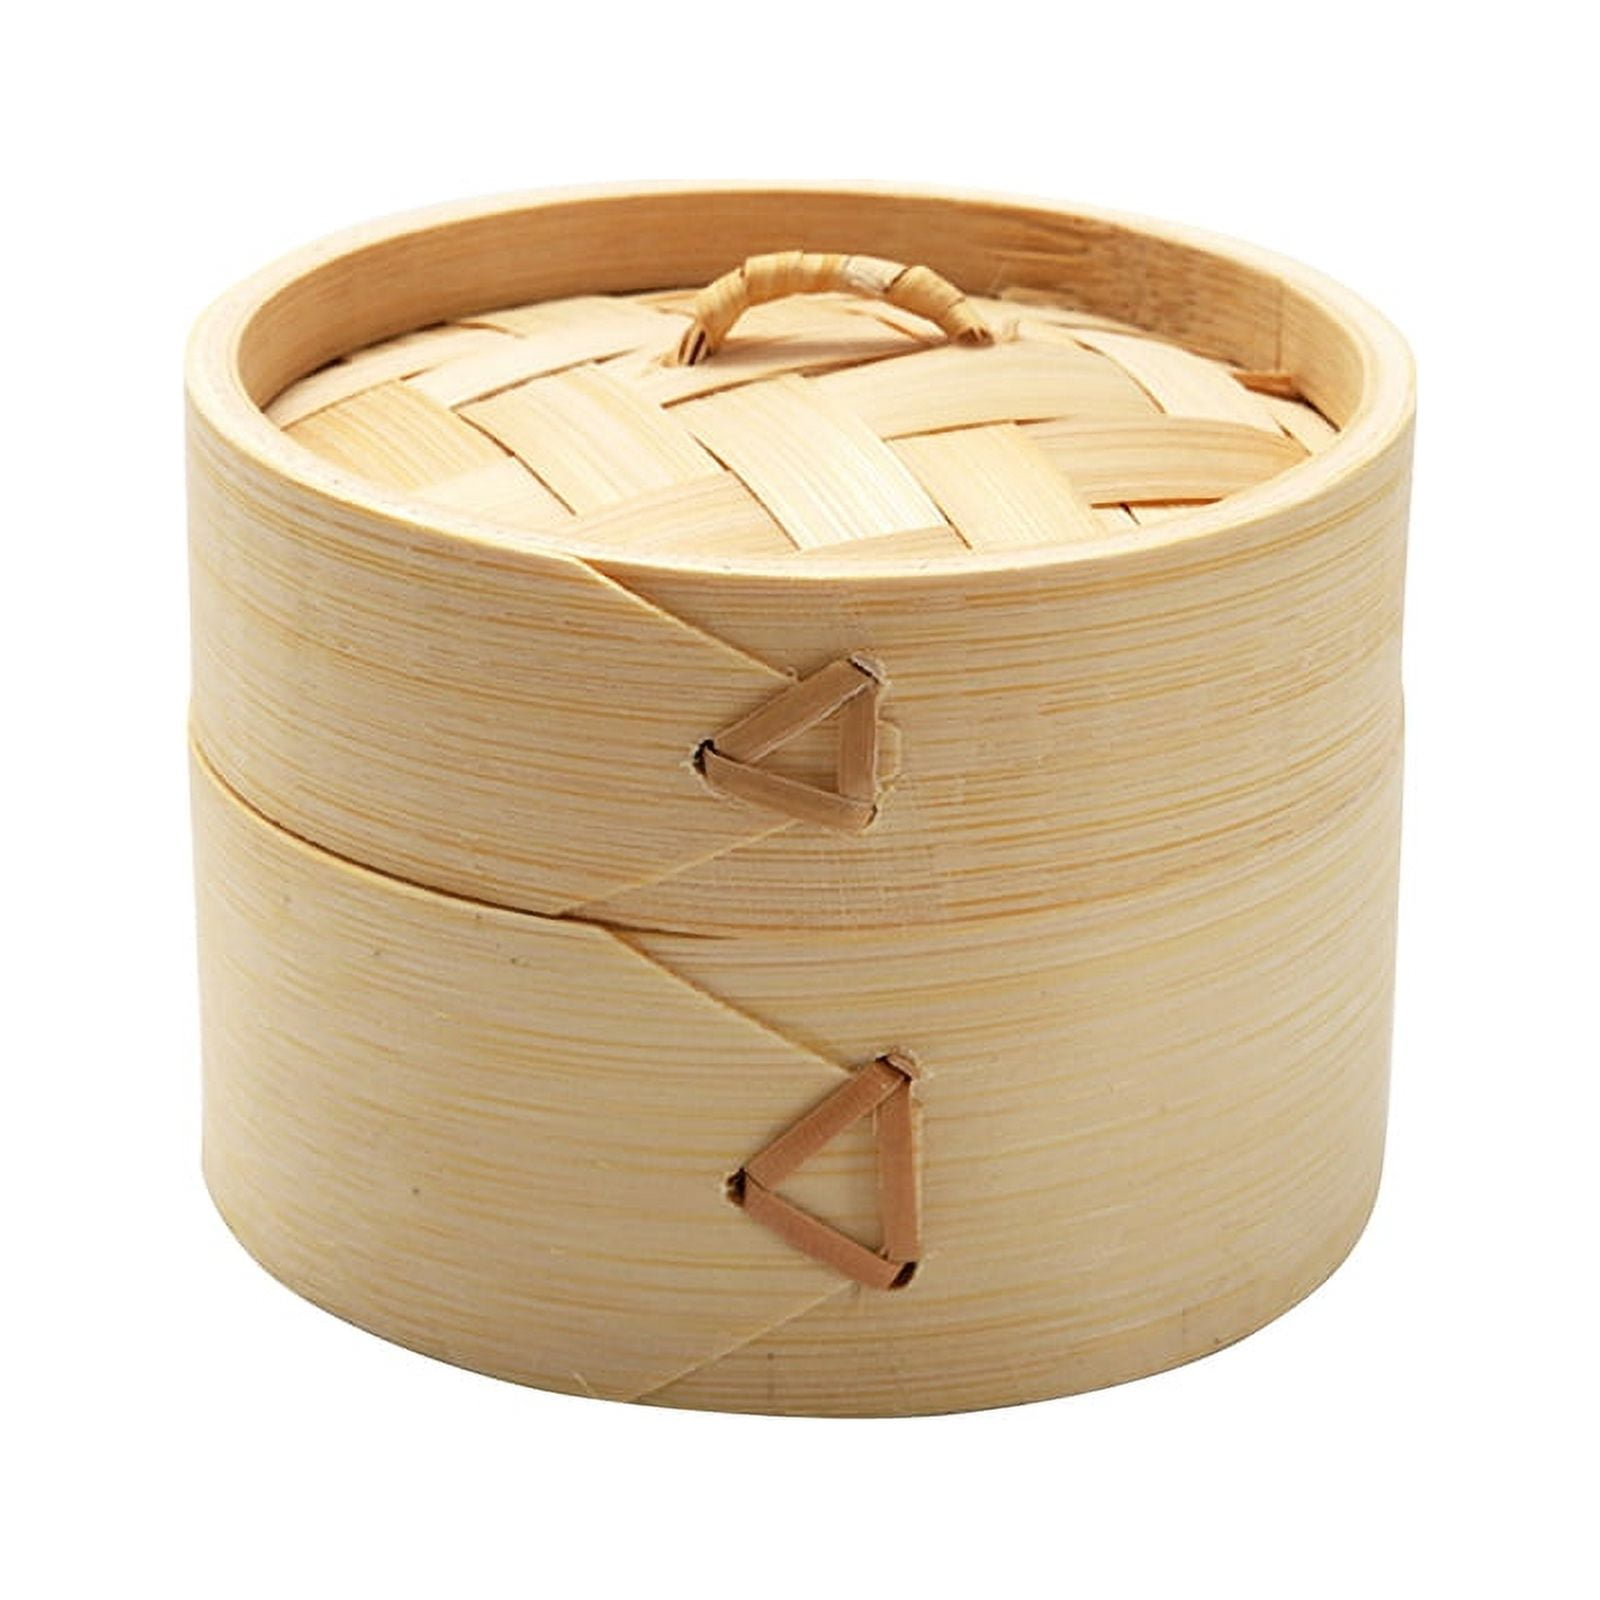 How to use bamboo steamer baskets – Kana